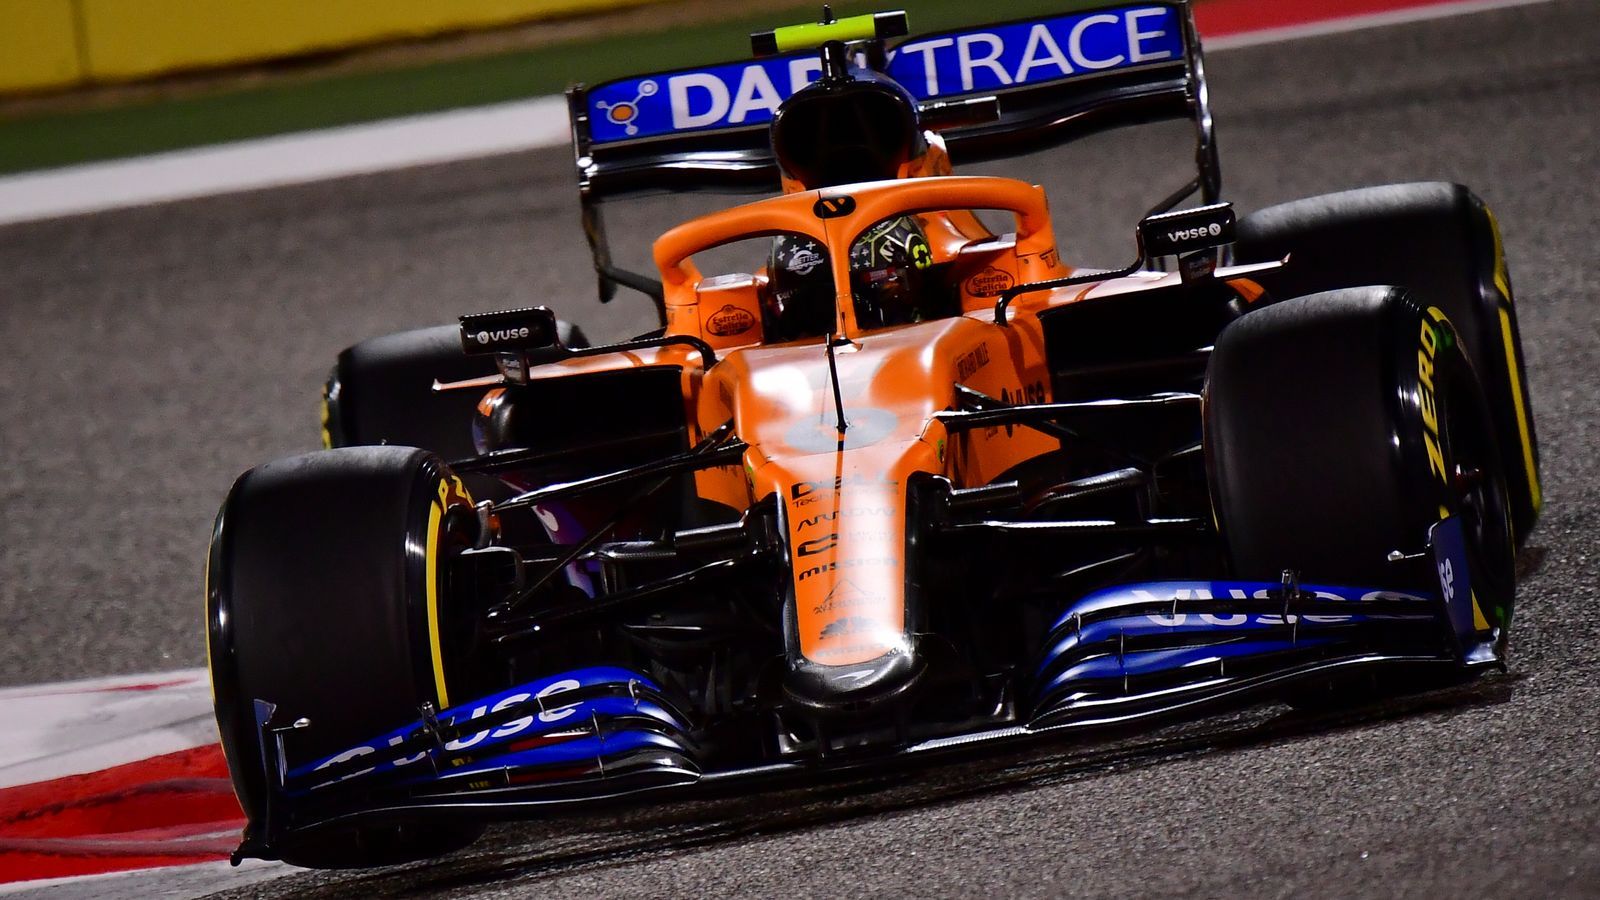 McLaren Set 2021 Car February Launch Date For Mercedes Powered MCL35M And Daniel Ricciardo Reveal